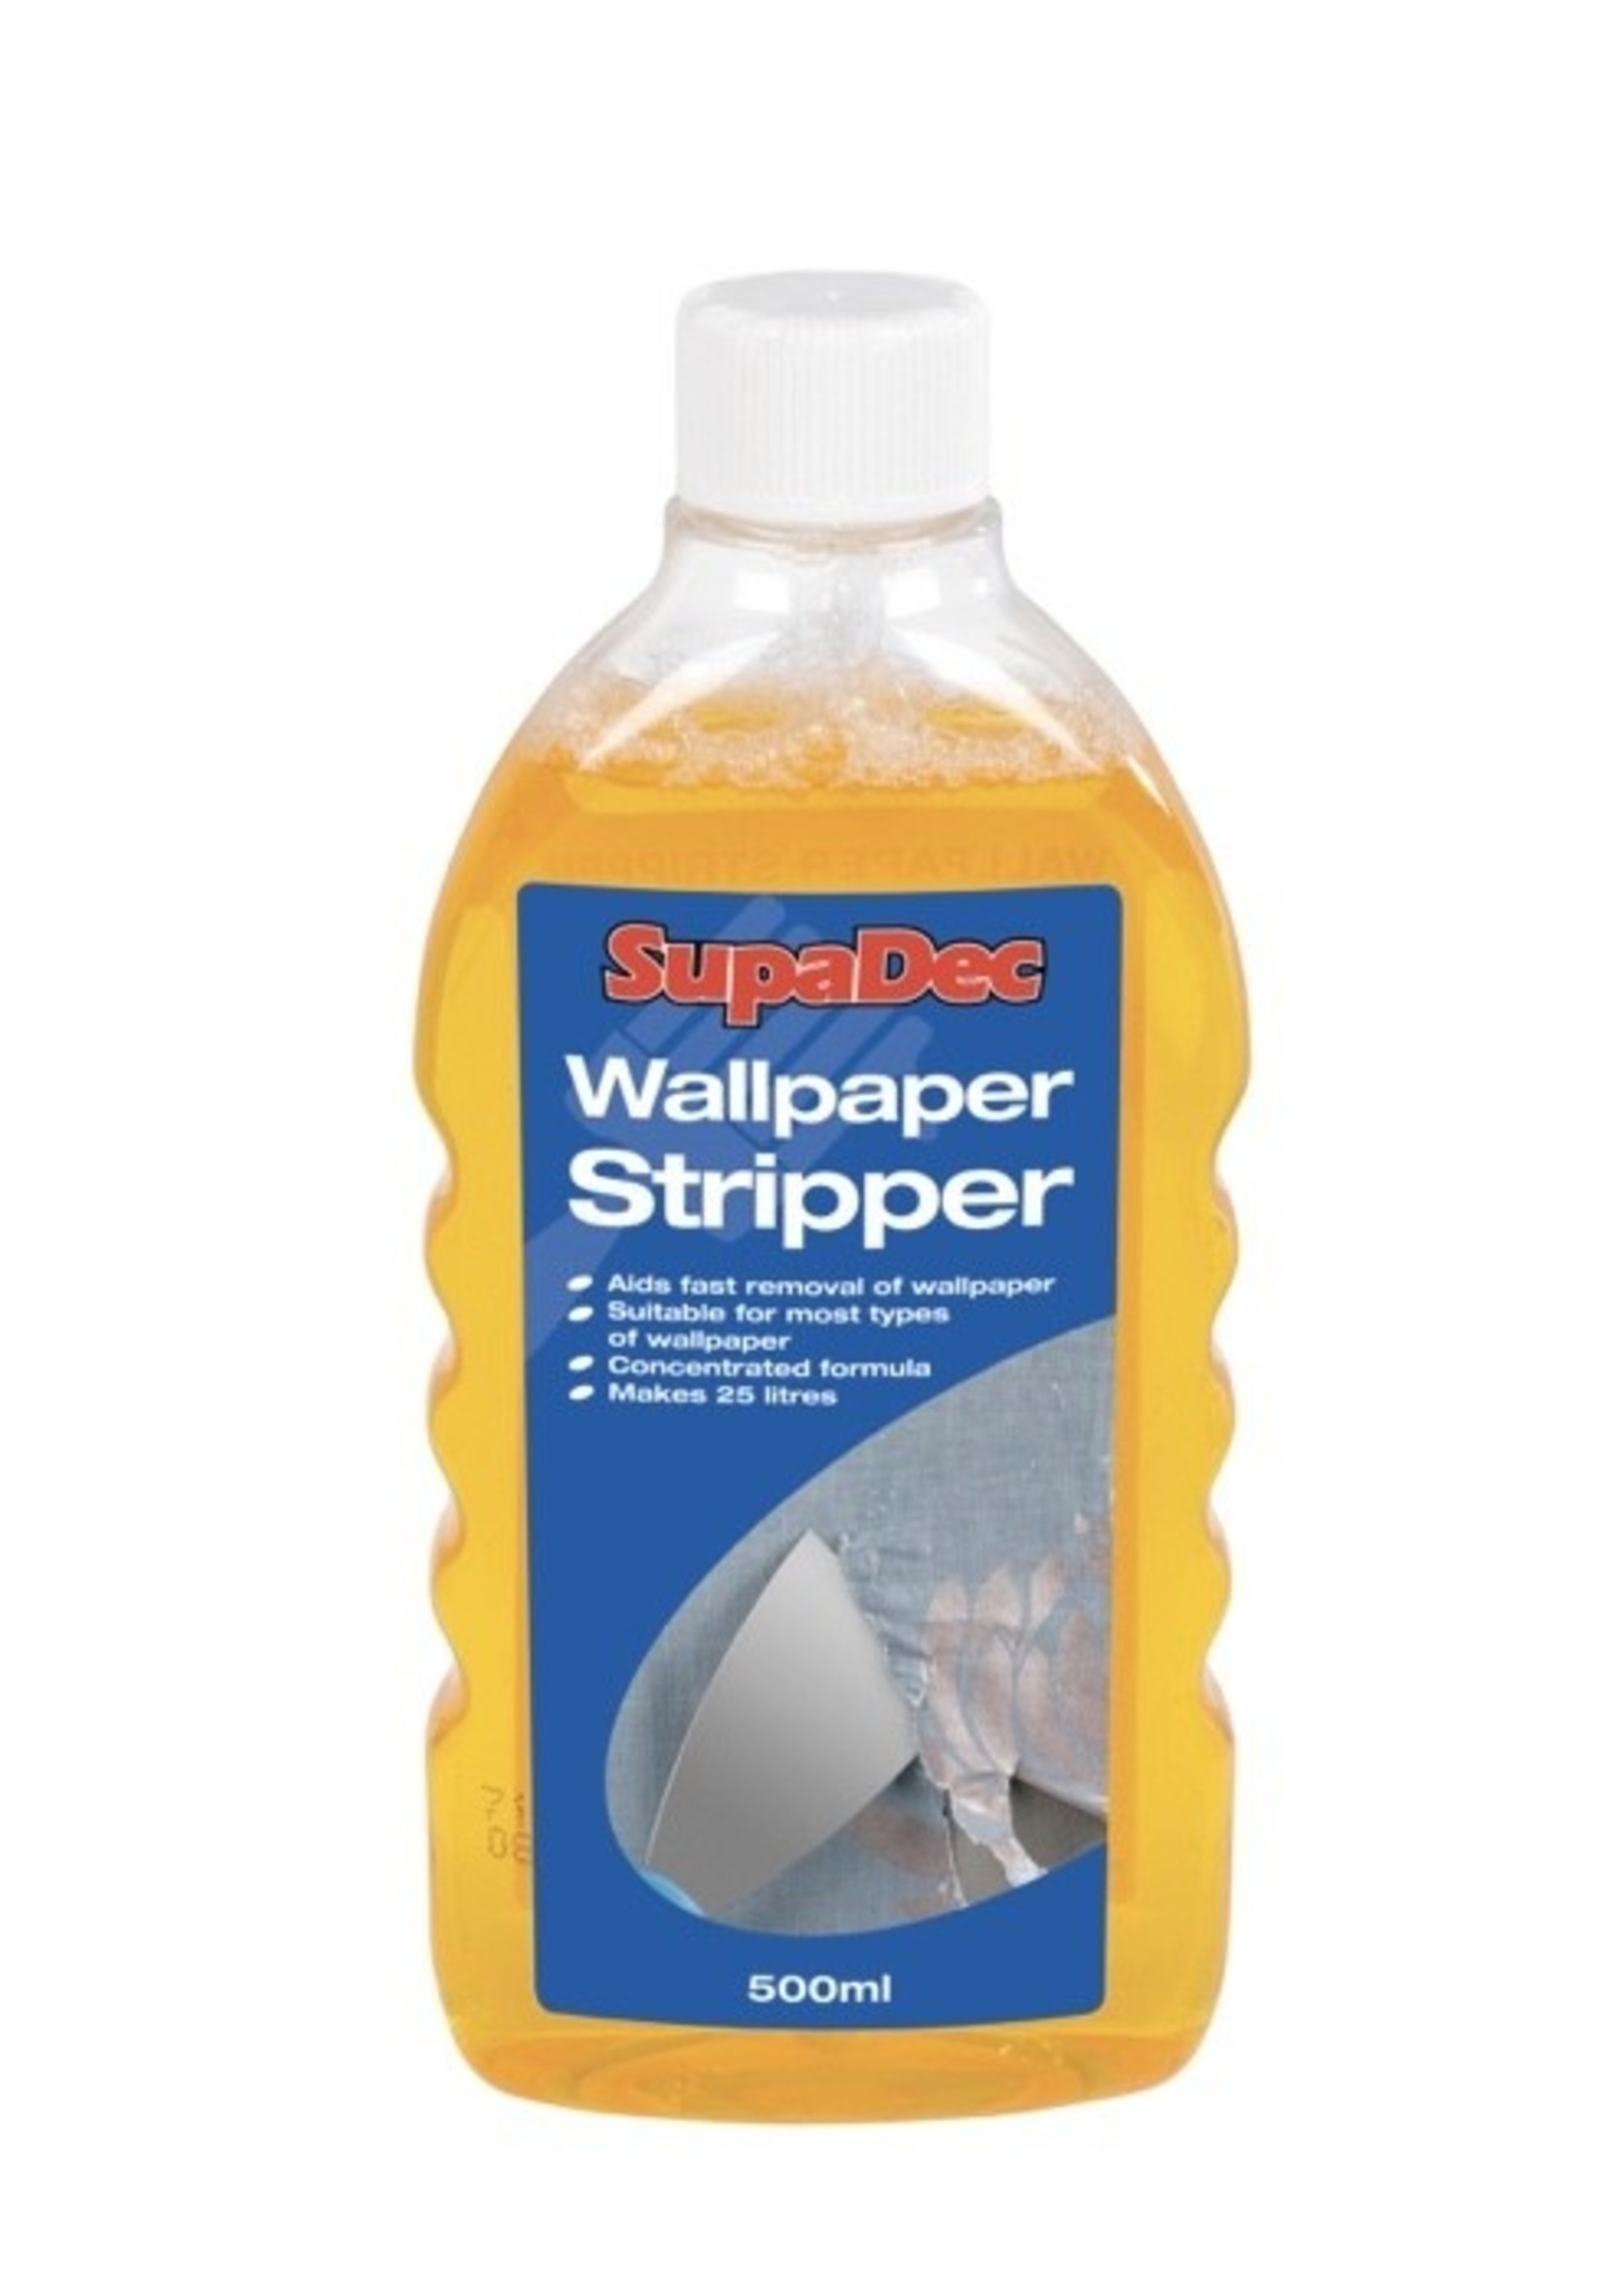 SupaDec SupaDec Wallpaper Stripper 500ml